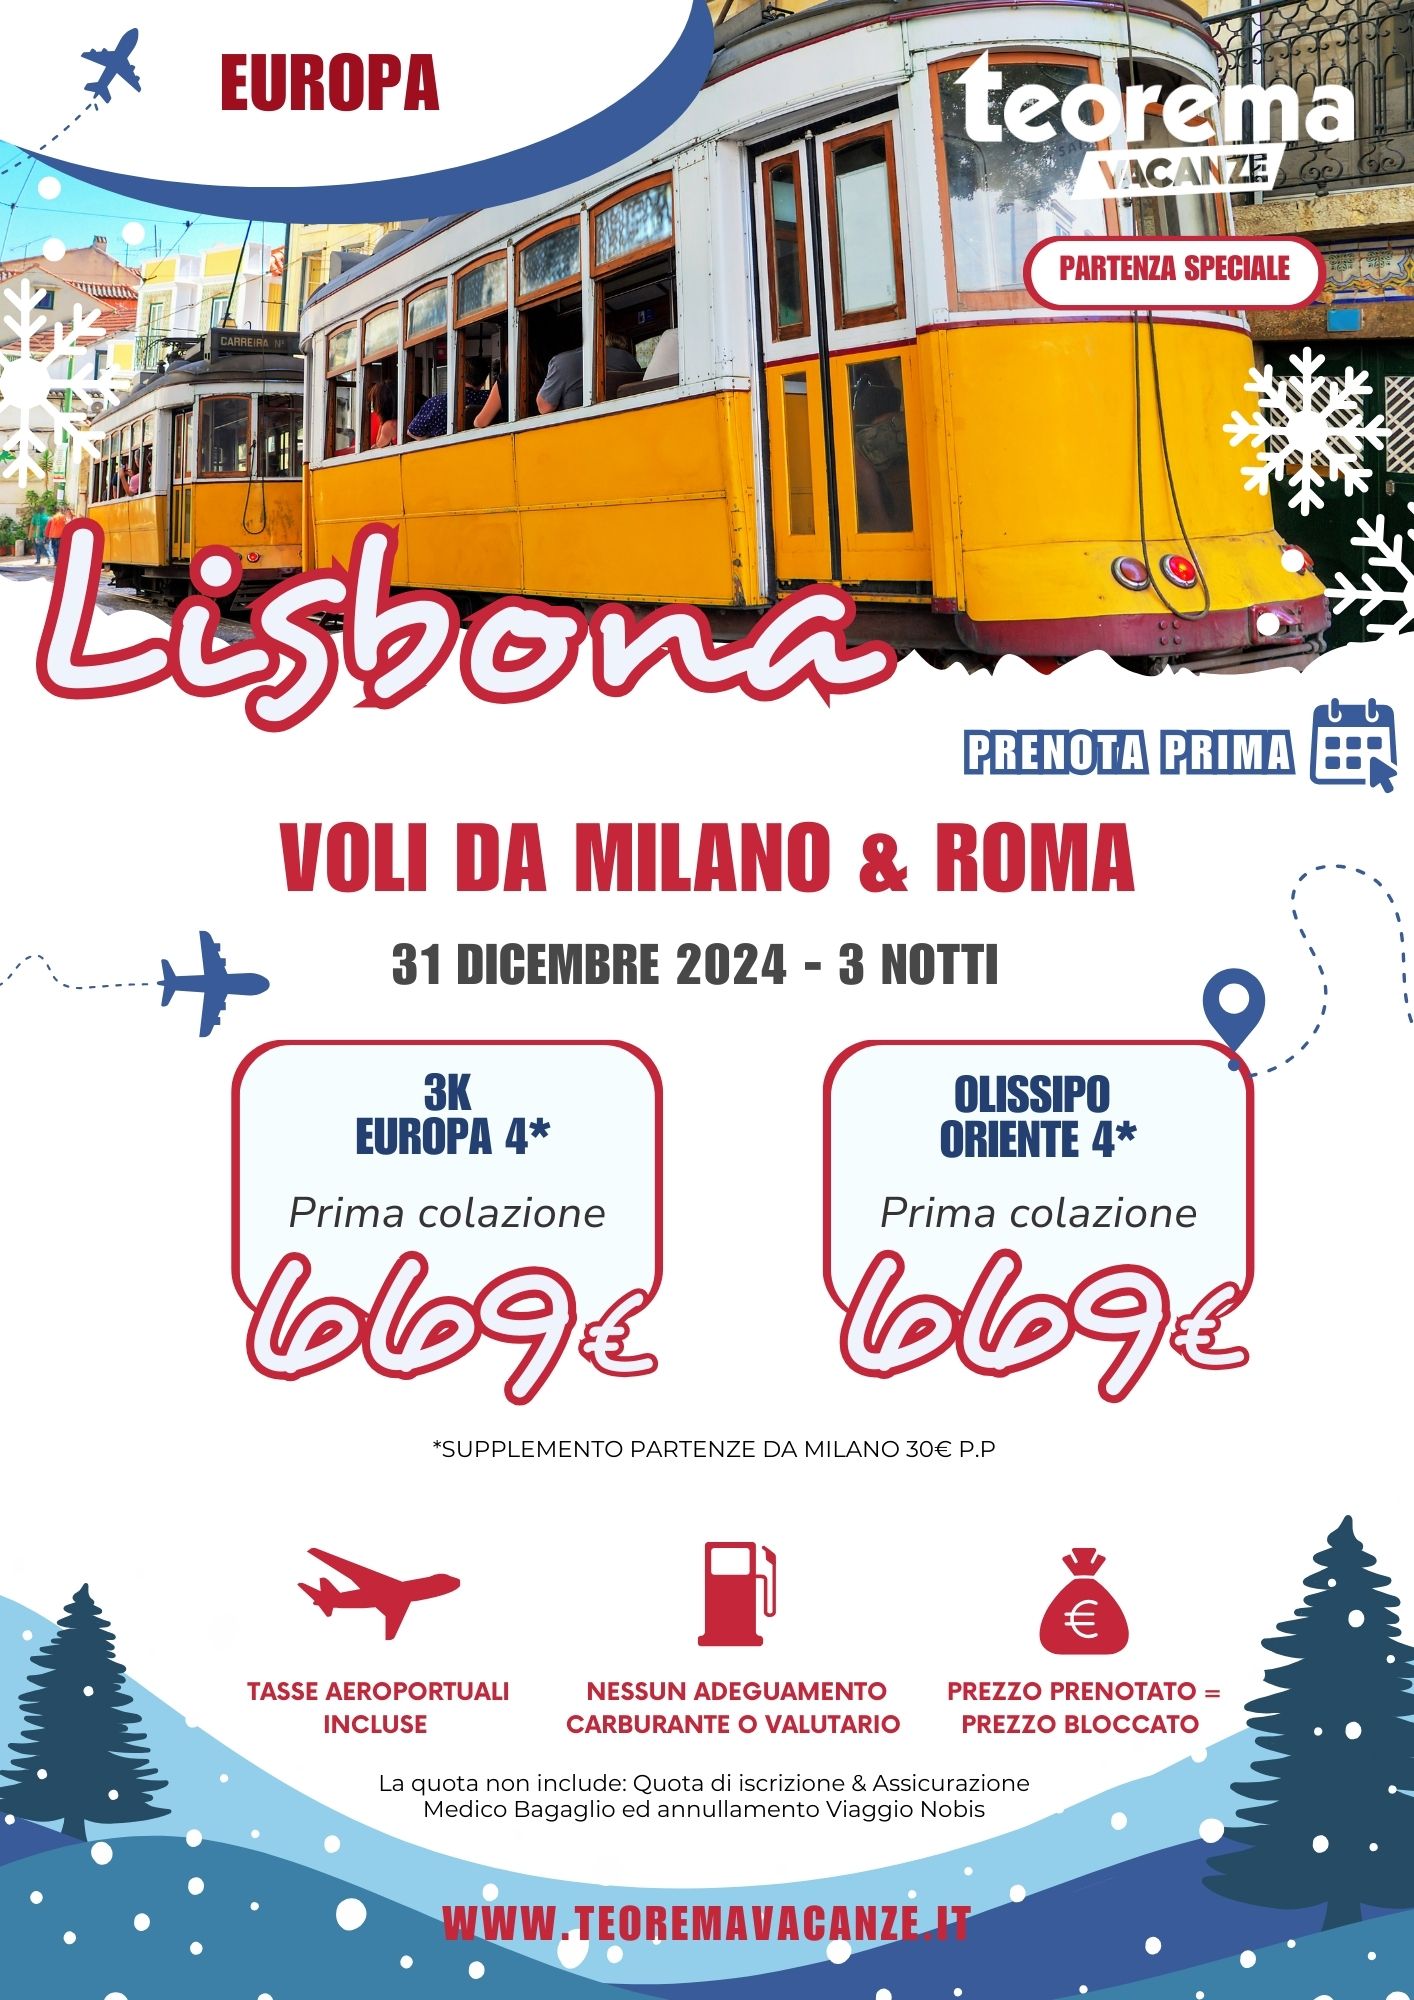 TEOREMA WINTER 2025 - LISBONA DA MILANO & ROMA